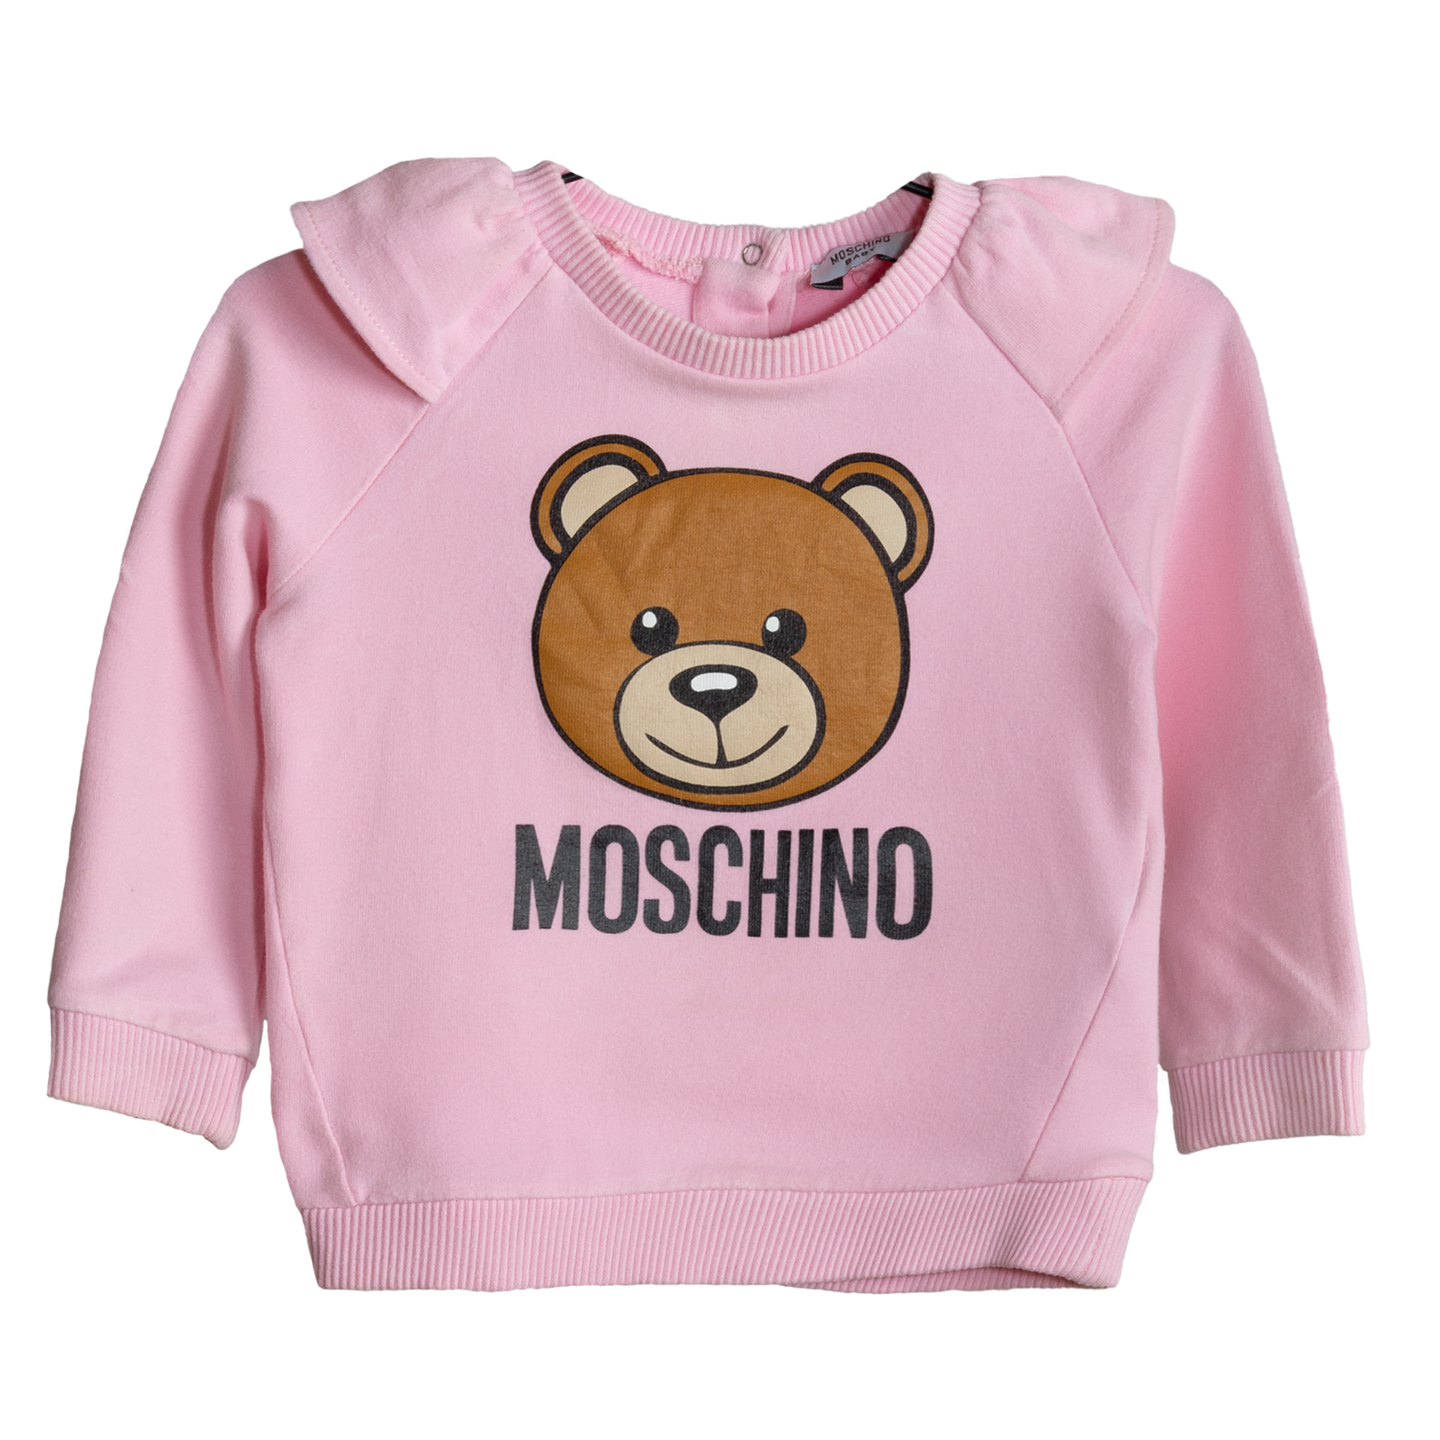 MOSCHINO - DRAWN TEDDY BEAR SWEATSHIRT - Eleonora Bonucci